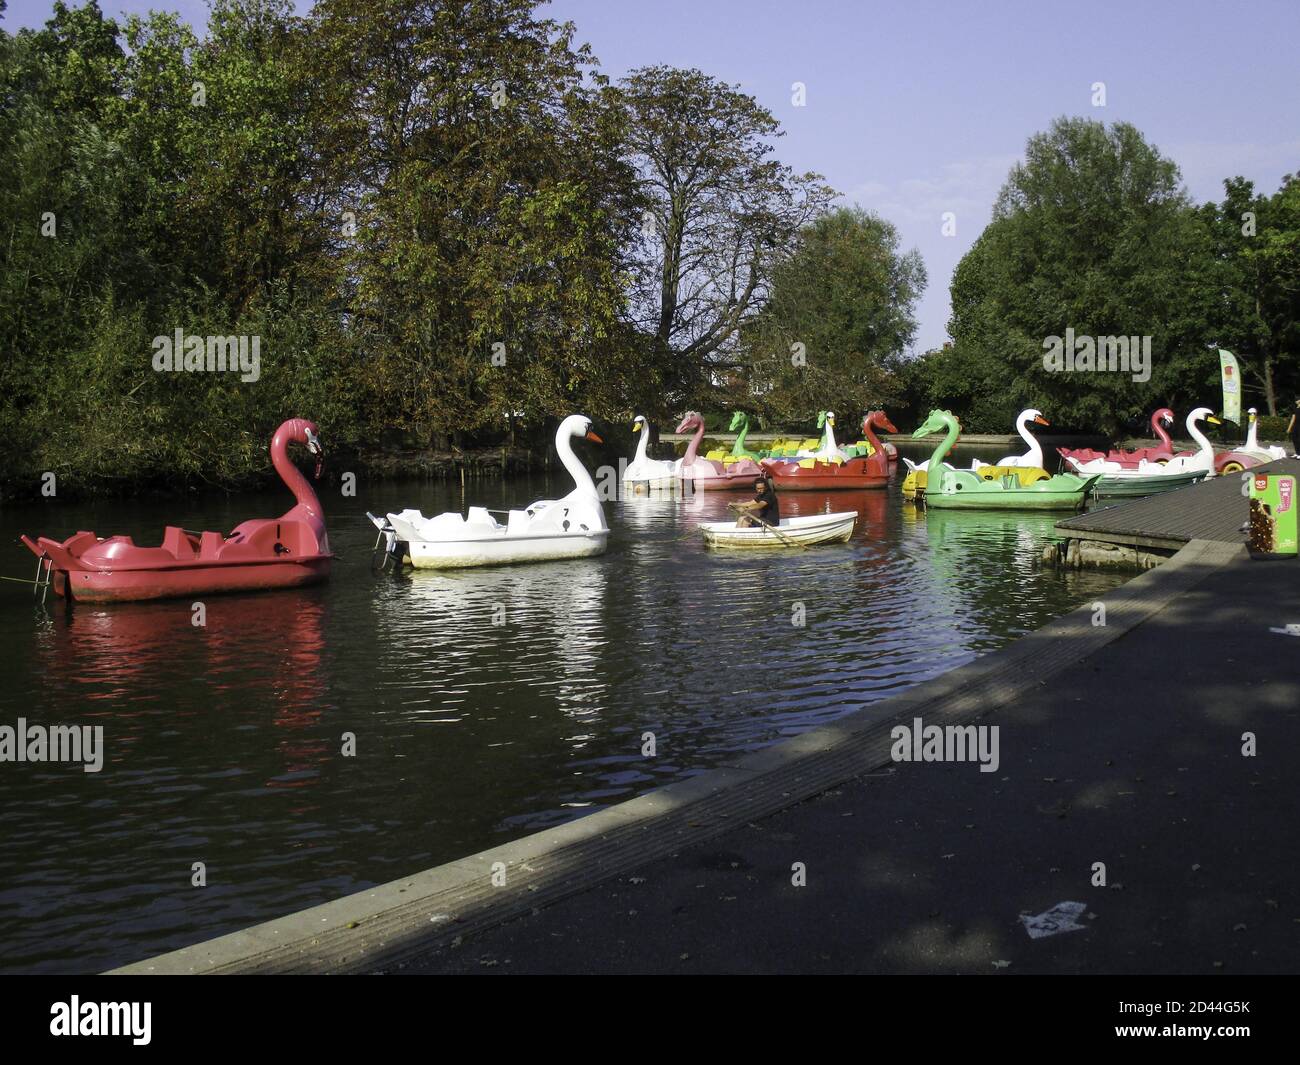 LONDON, UNITED KINGDOM - Sep 20, 2020: The pedalo's on the boating lake at Alexandra Palace, London Stock Photo